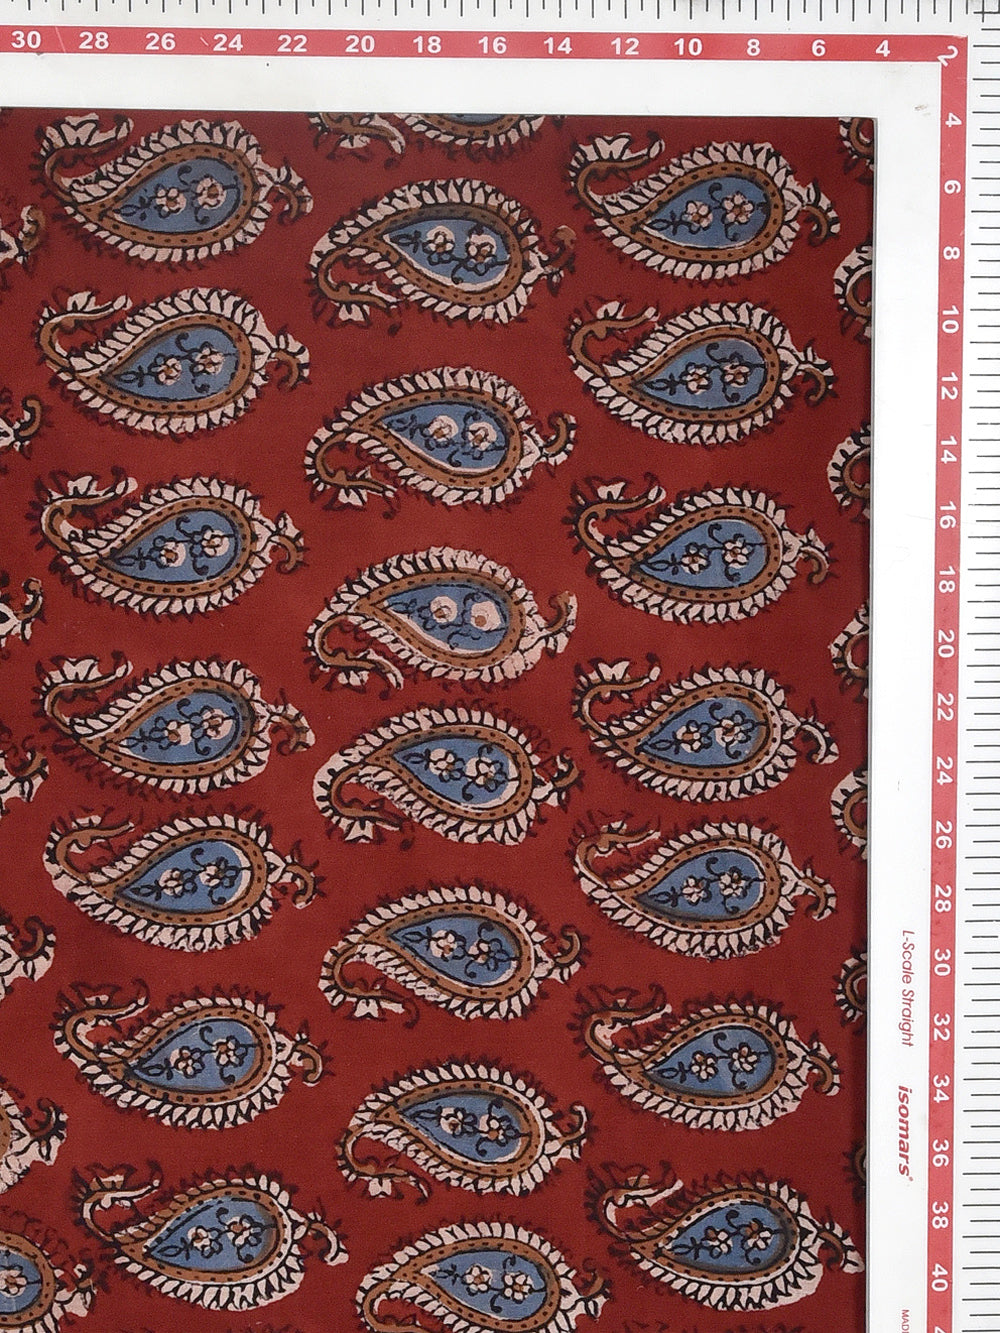 Red Paisley Booti Kalamkari Cotton Cambric Fabric